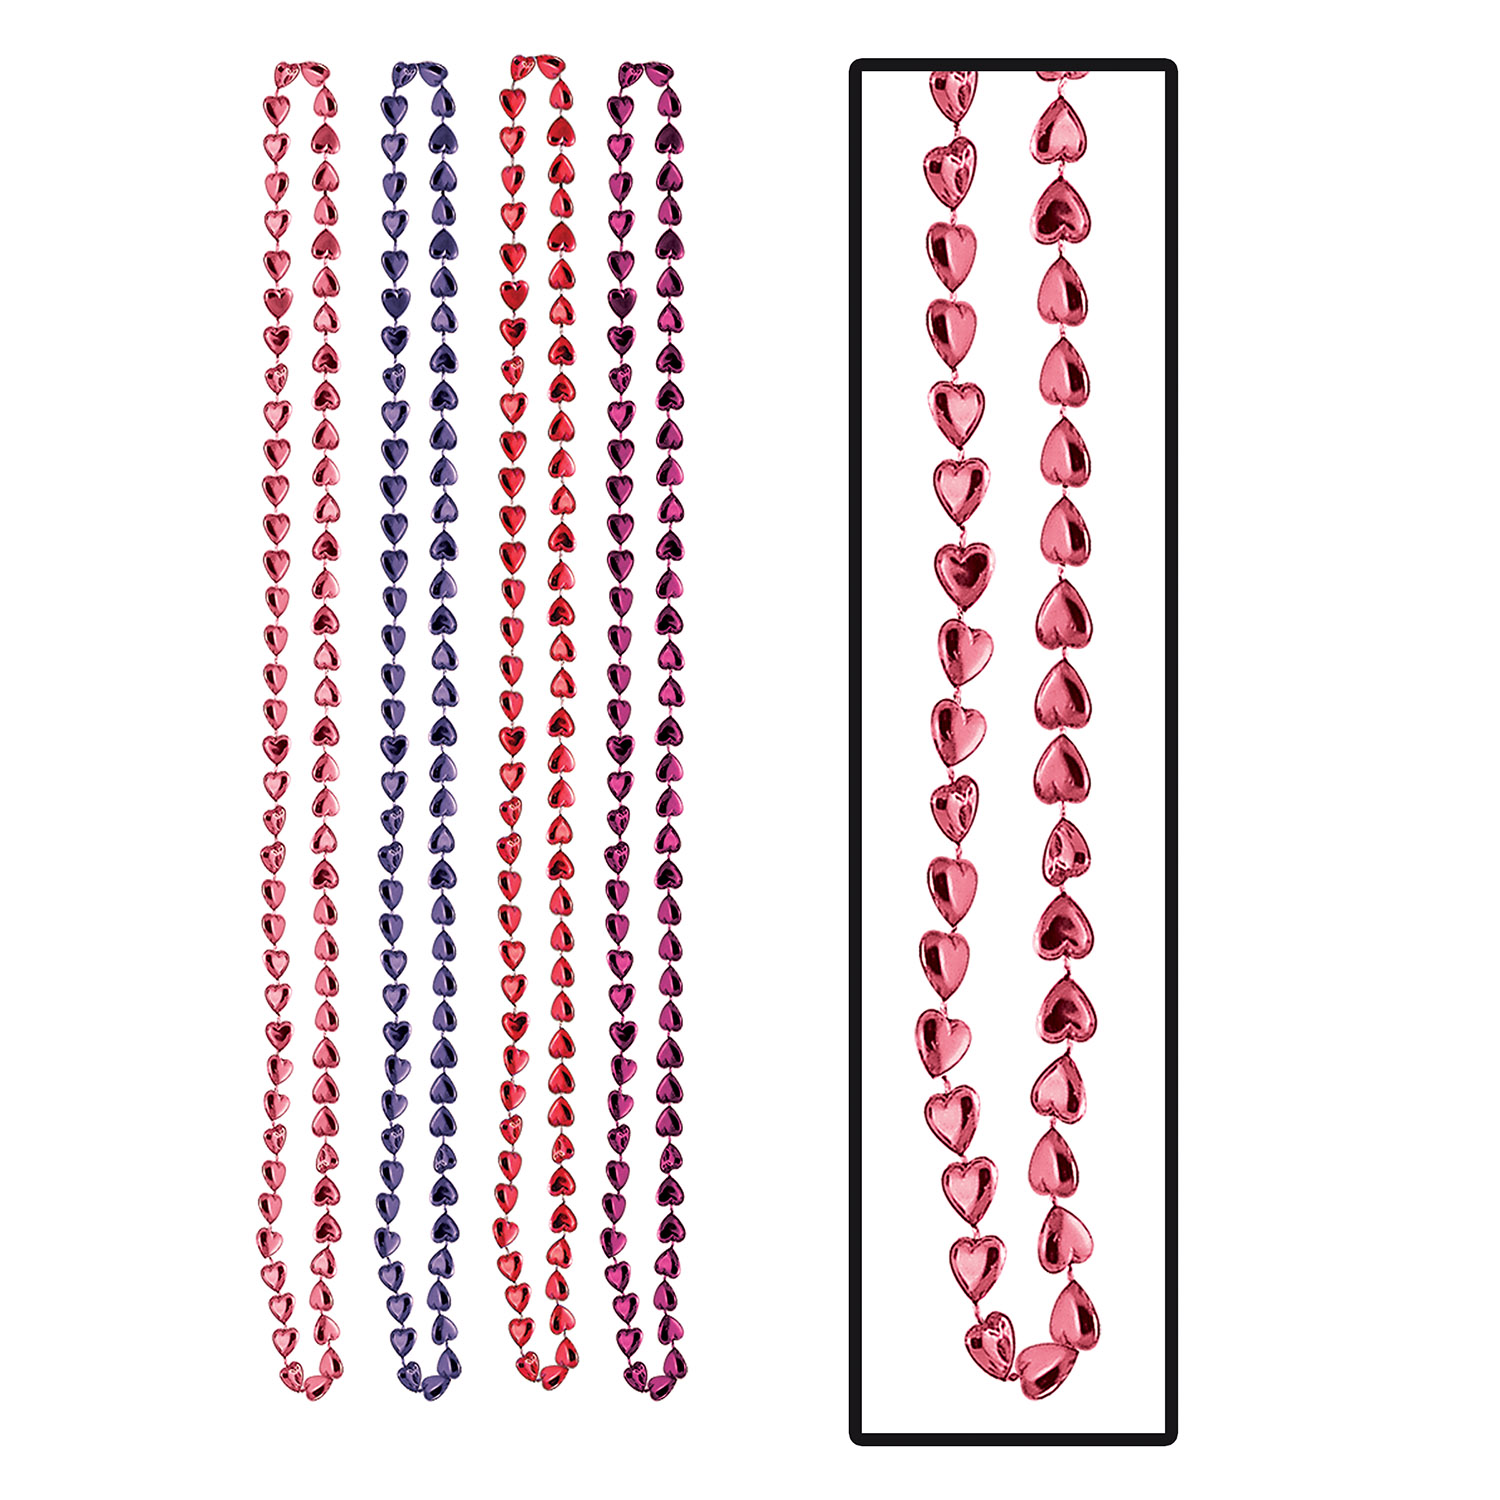 CANDY Heart Beads